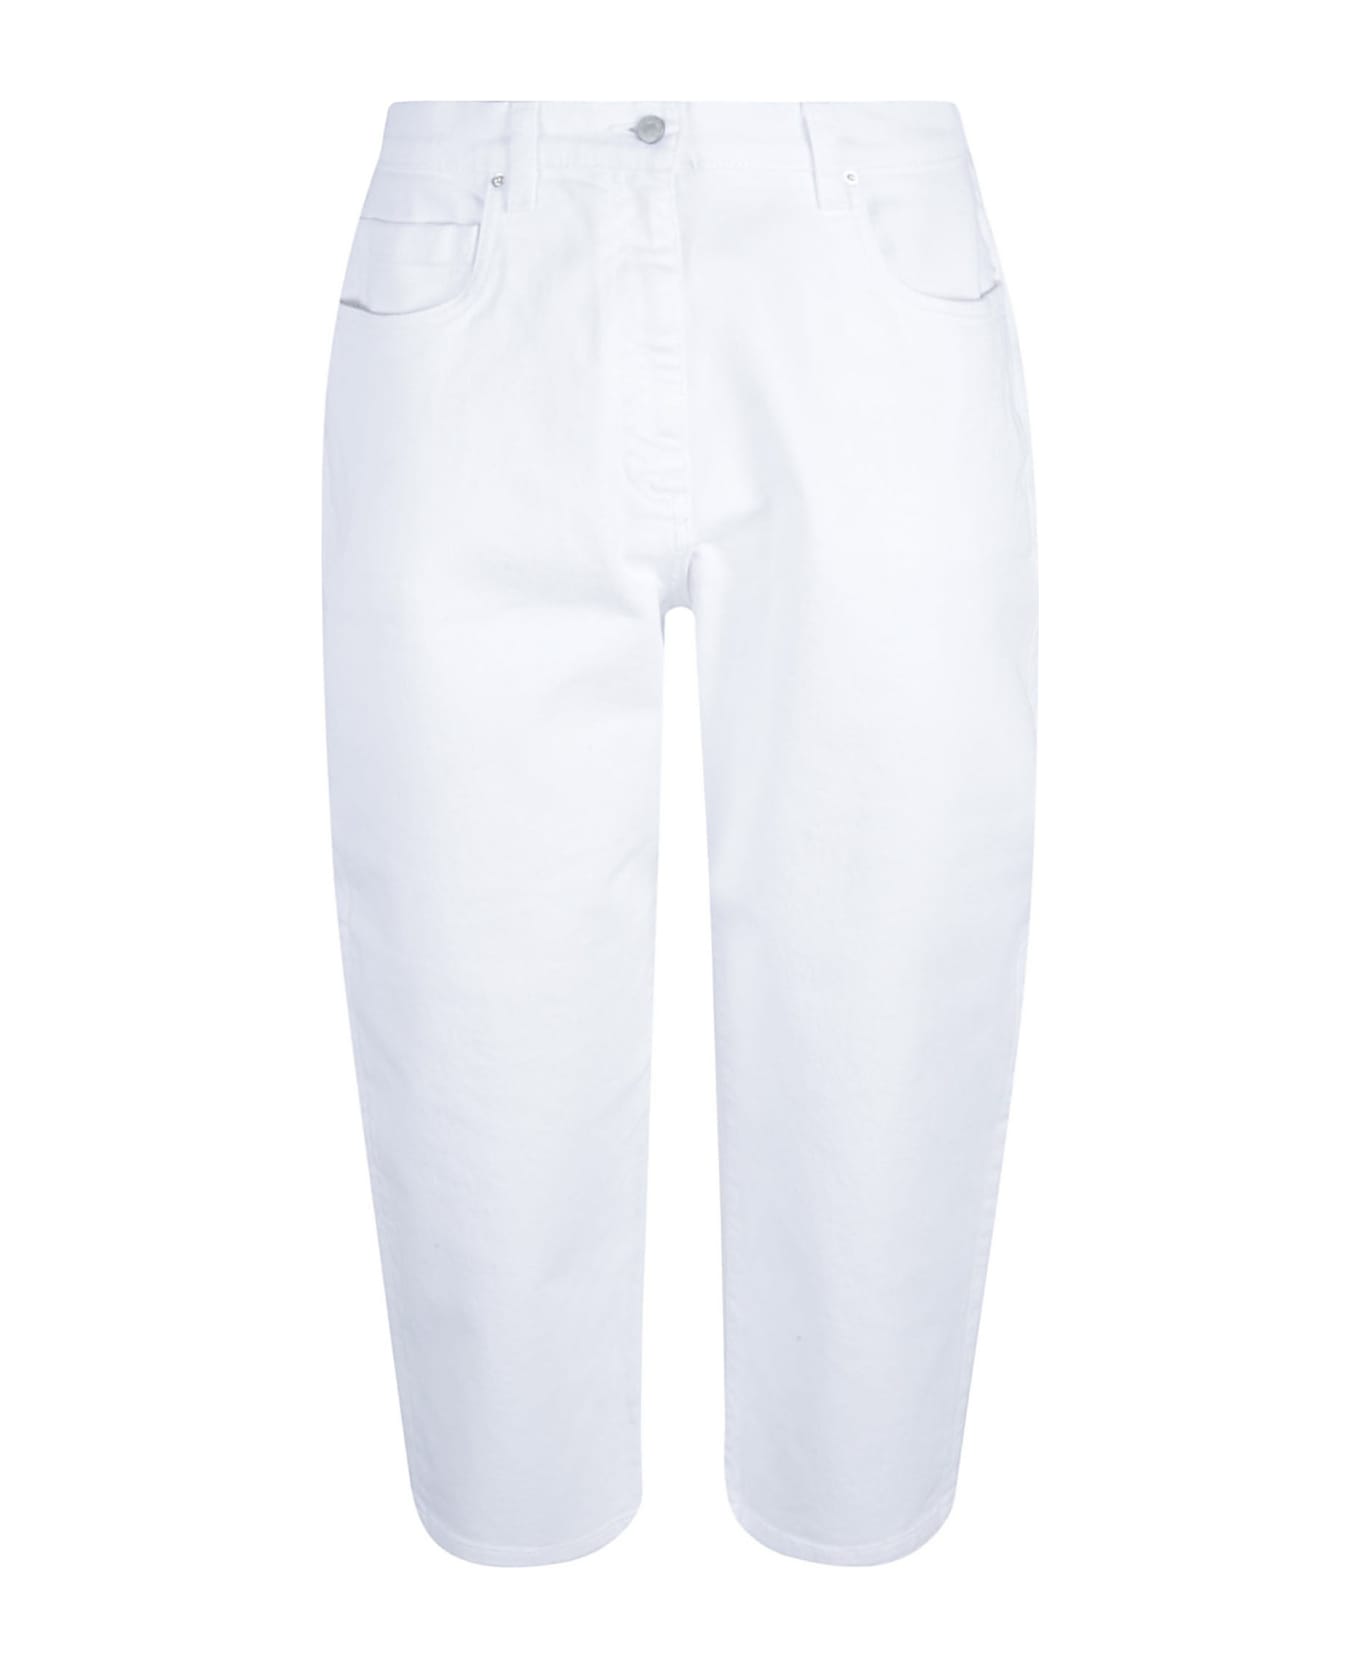 Fabiana Filippi Cropped Trousers - White